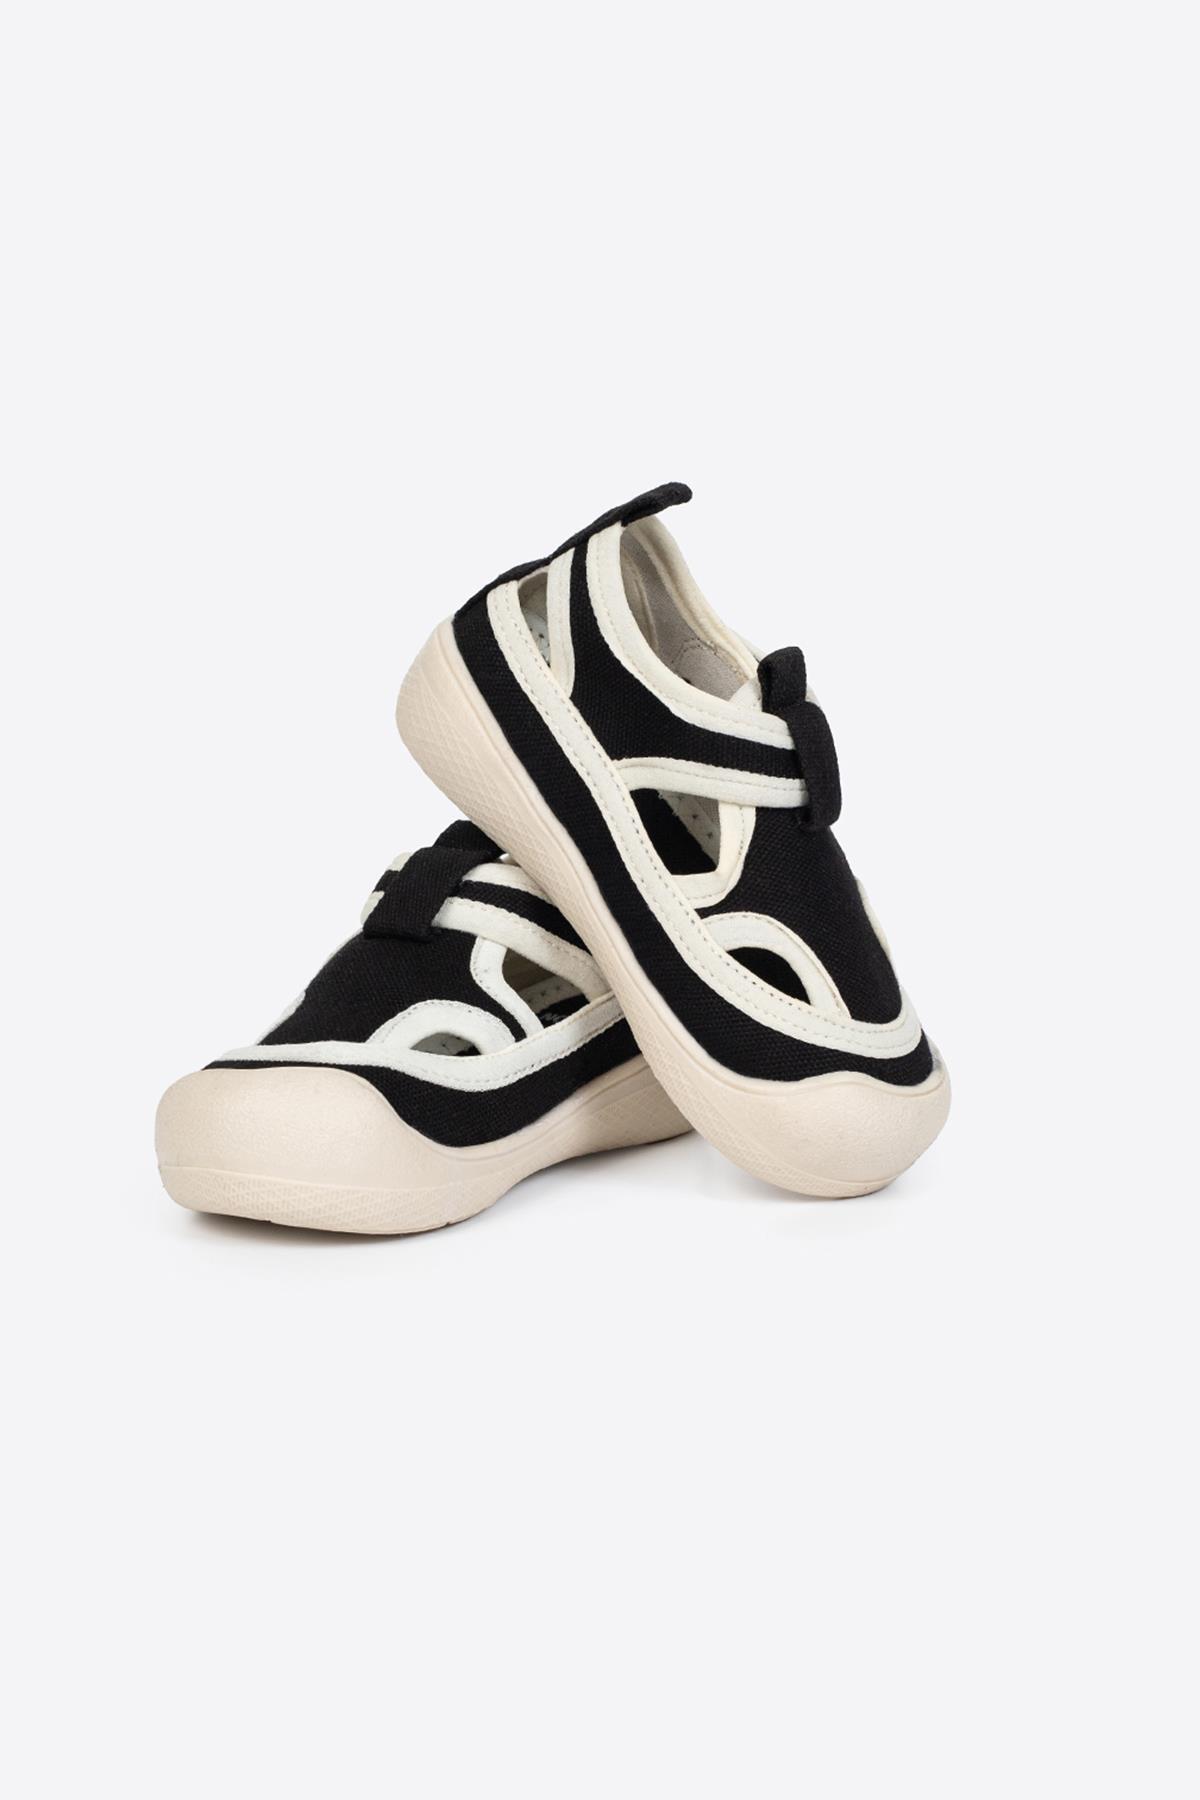 LETOON Black and White Kids Sandals